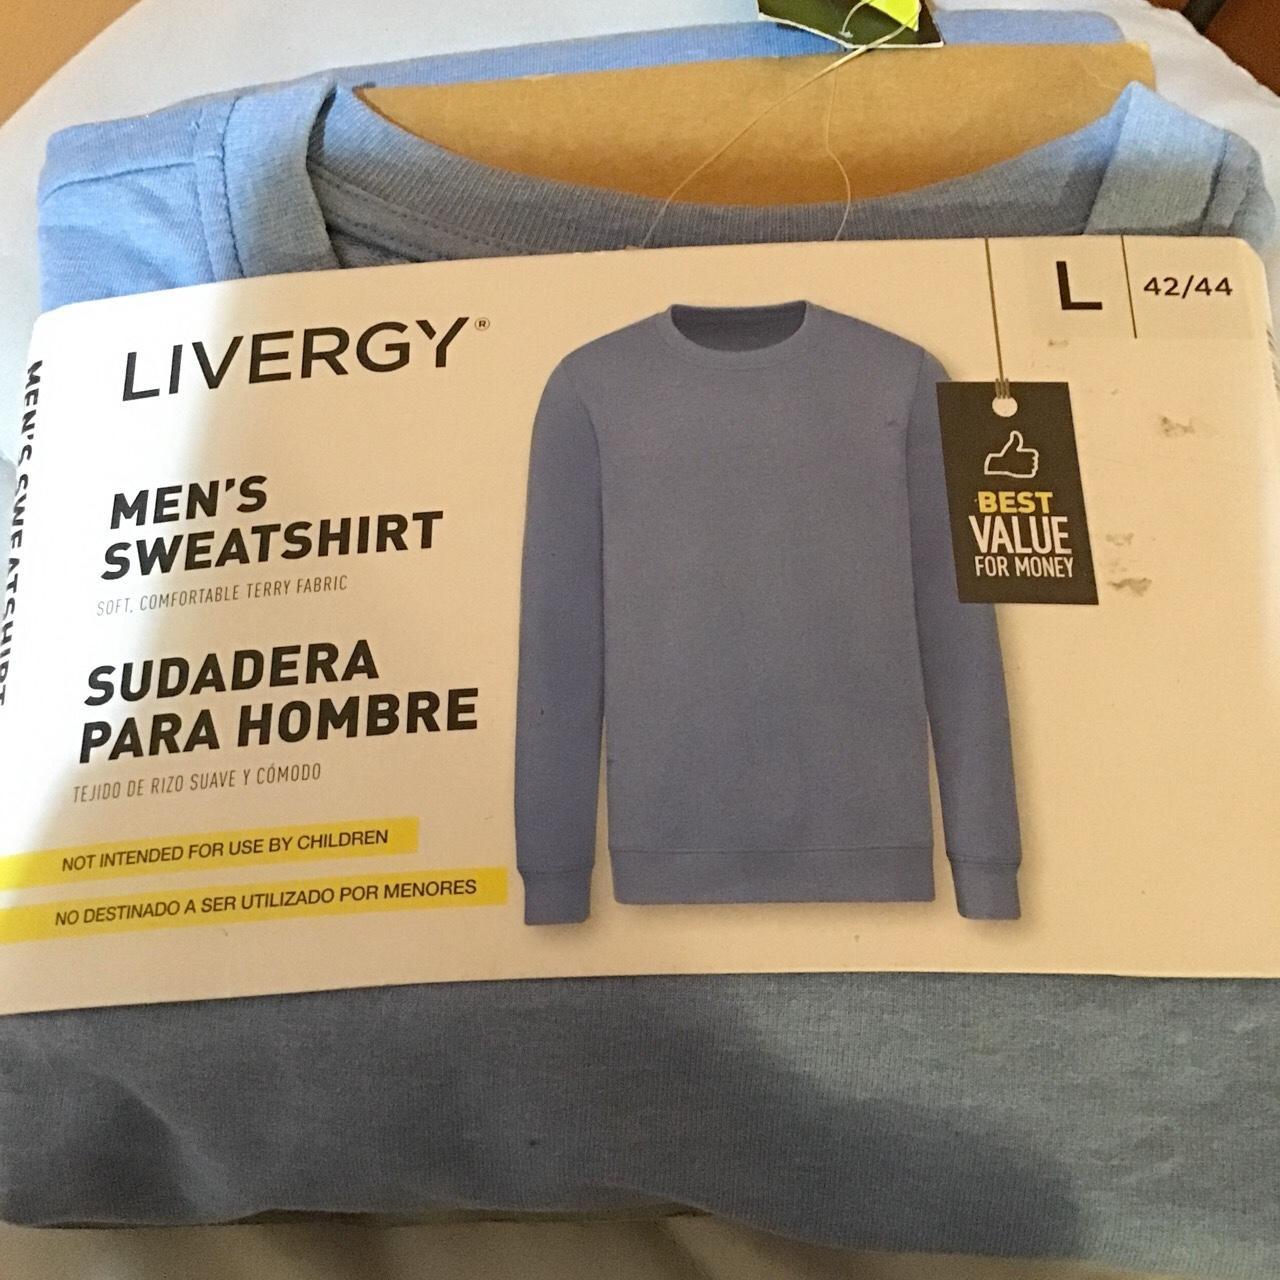 Livergy fabric Soft - Men\'s Depop Sweatshirt comfortable terry